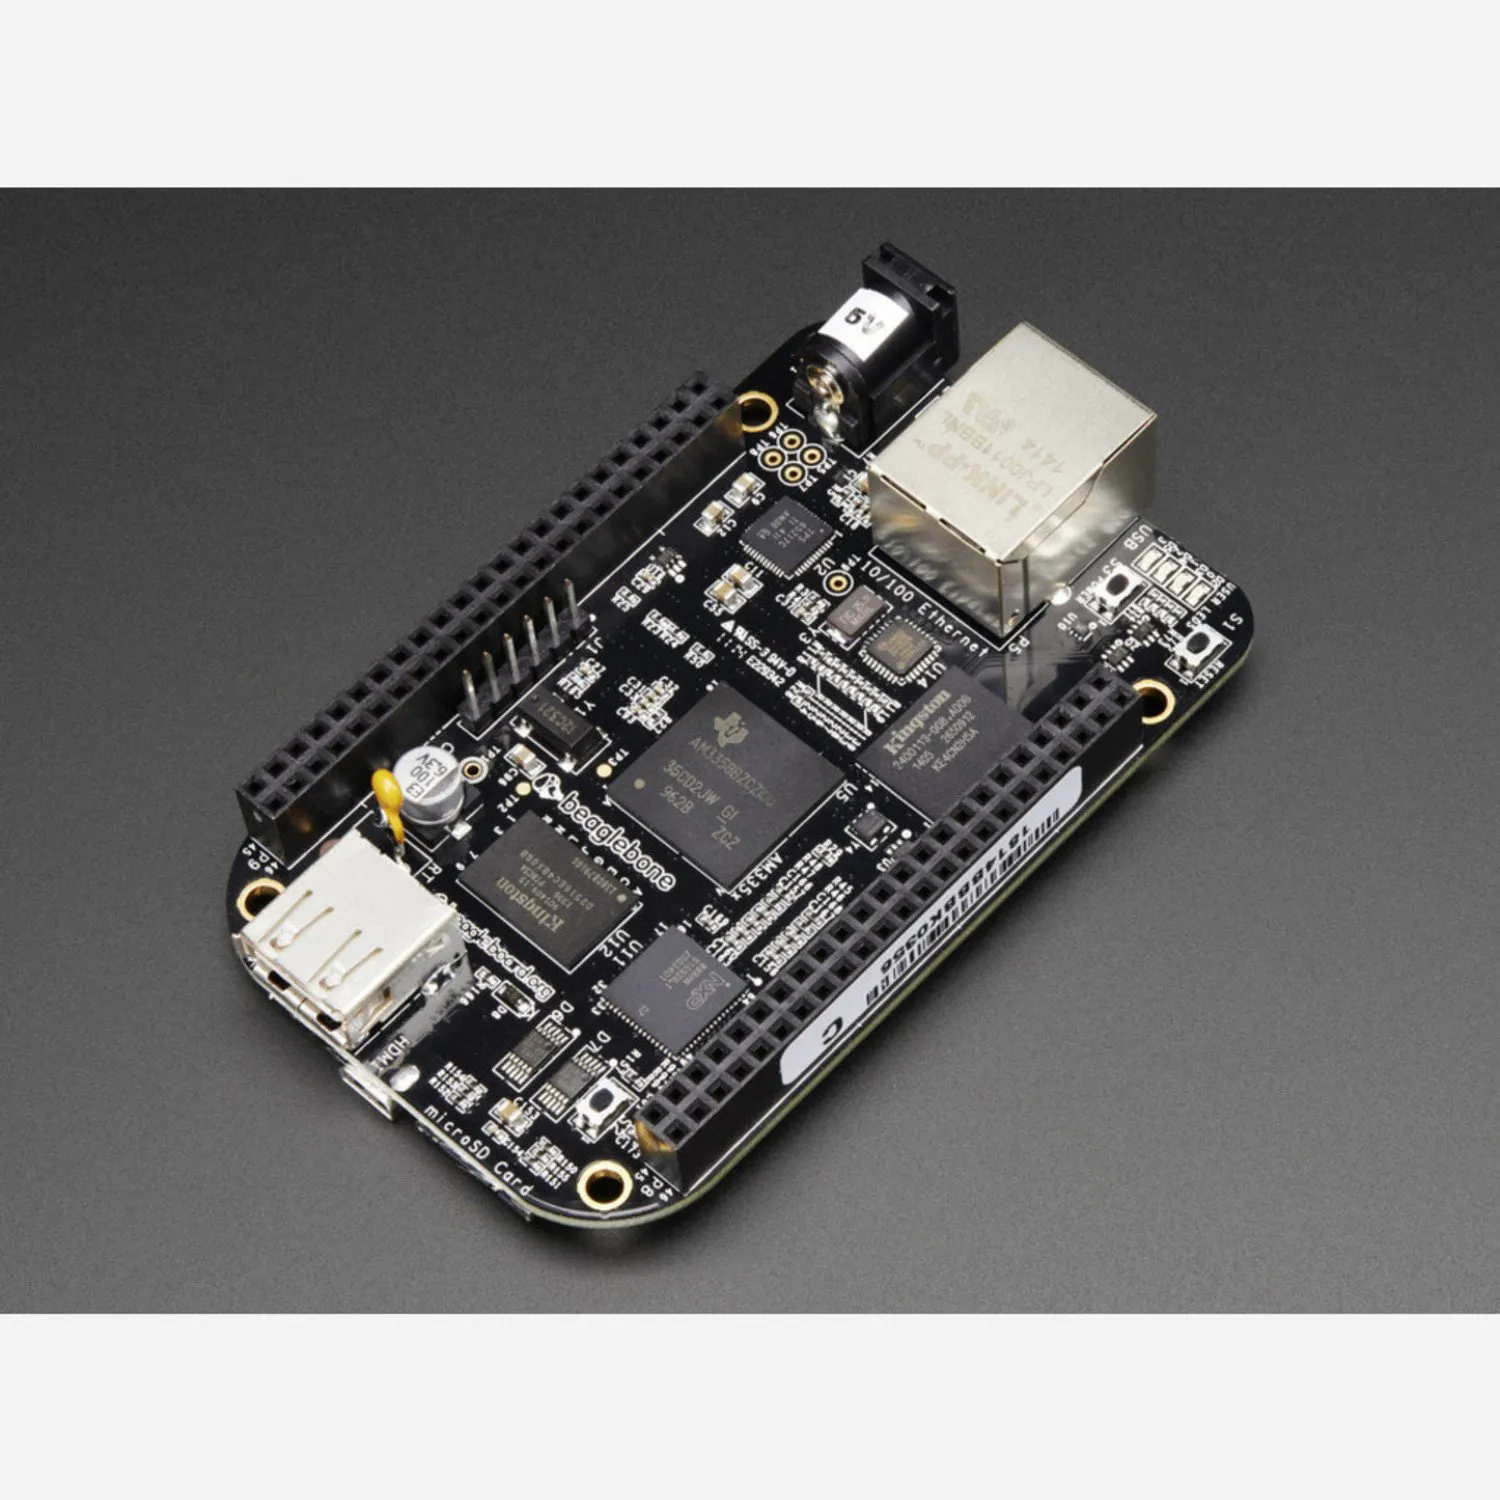 Photo of BeagleBone Black Rev C - 4GB Flash - Pre-installed Debian